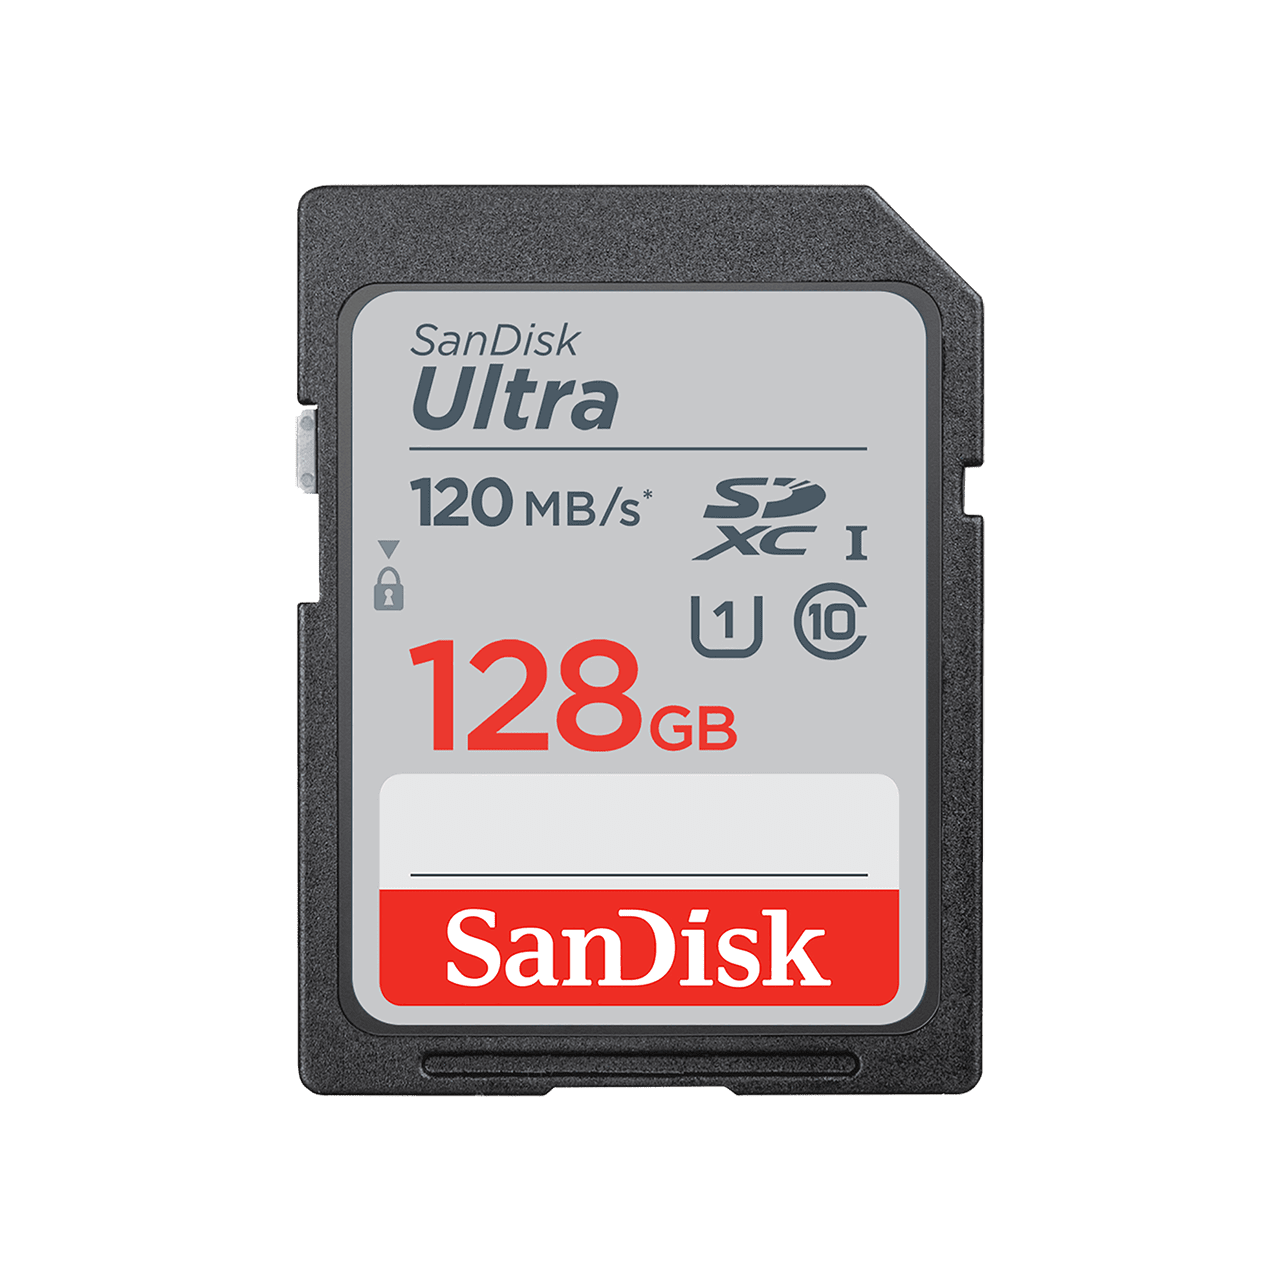 sandisk 128gb card